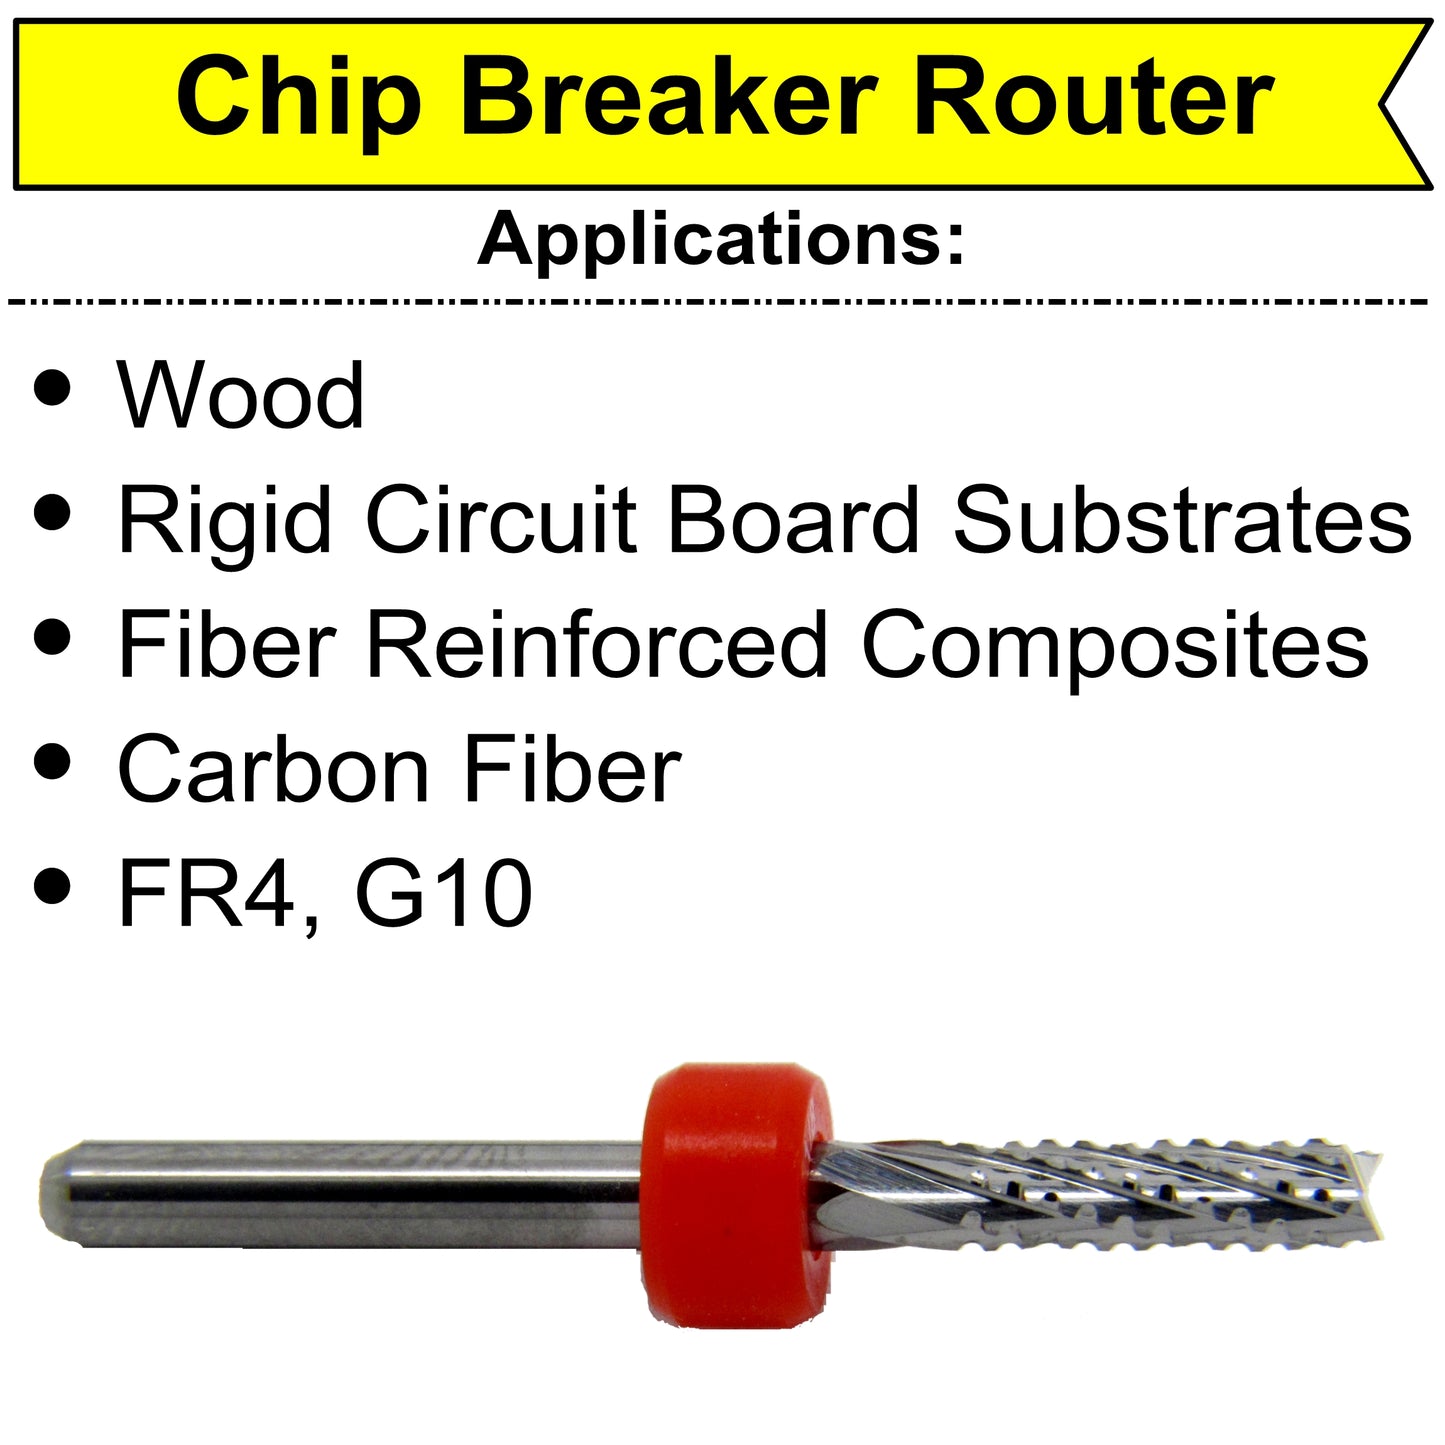 .0787" 2.00mm x .315" LOC - Chip Breaker Carbide Router - Fishtail Tip R166